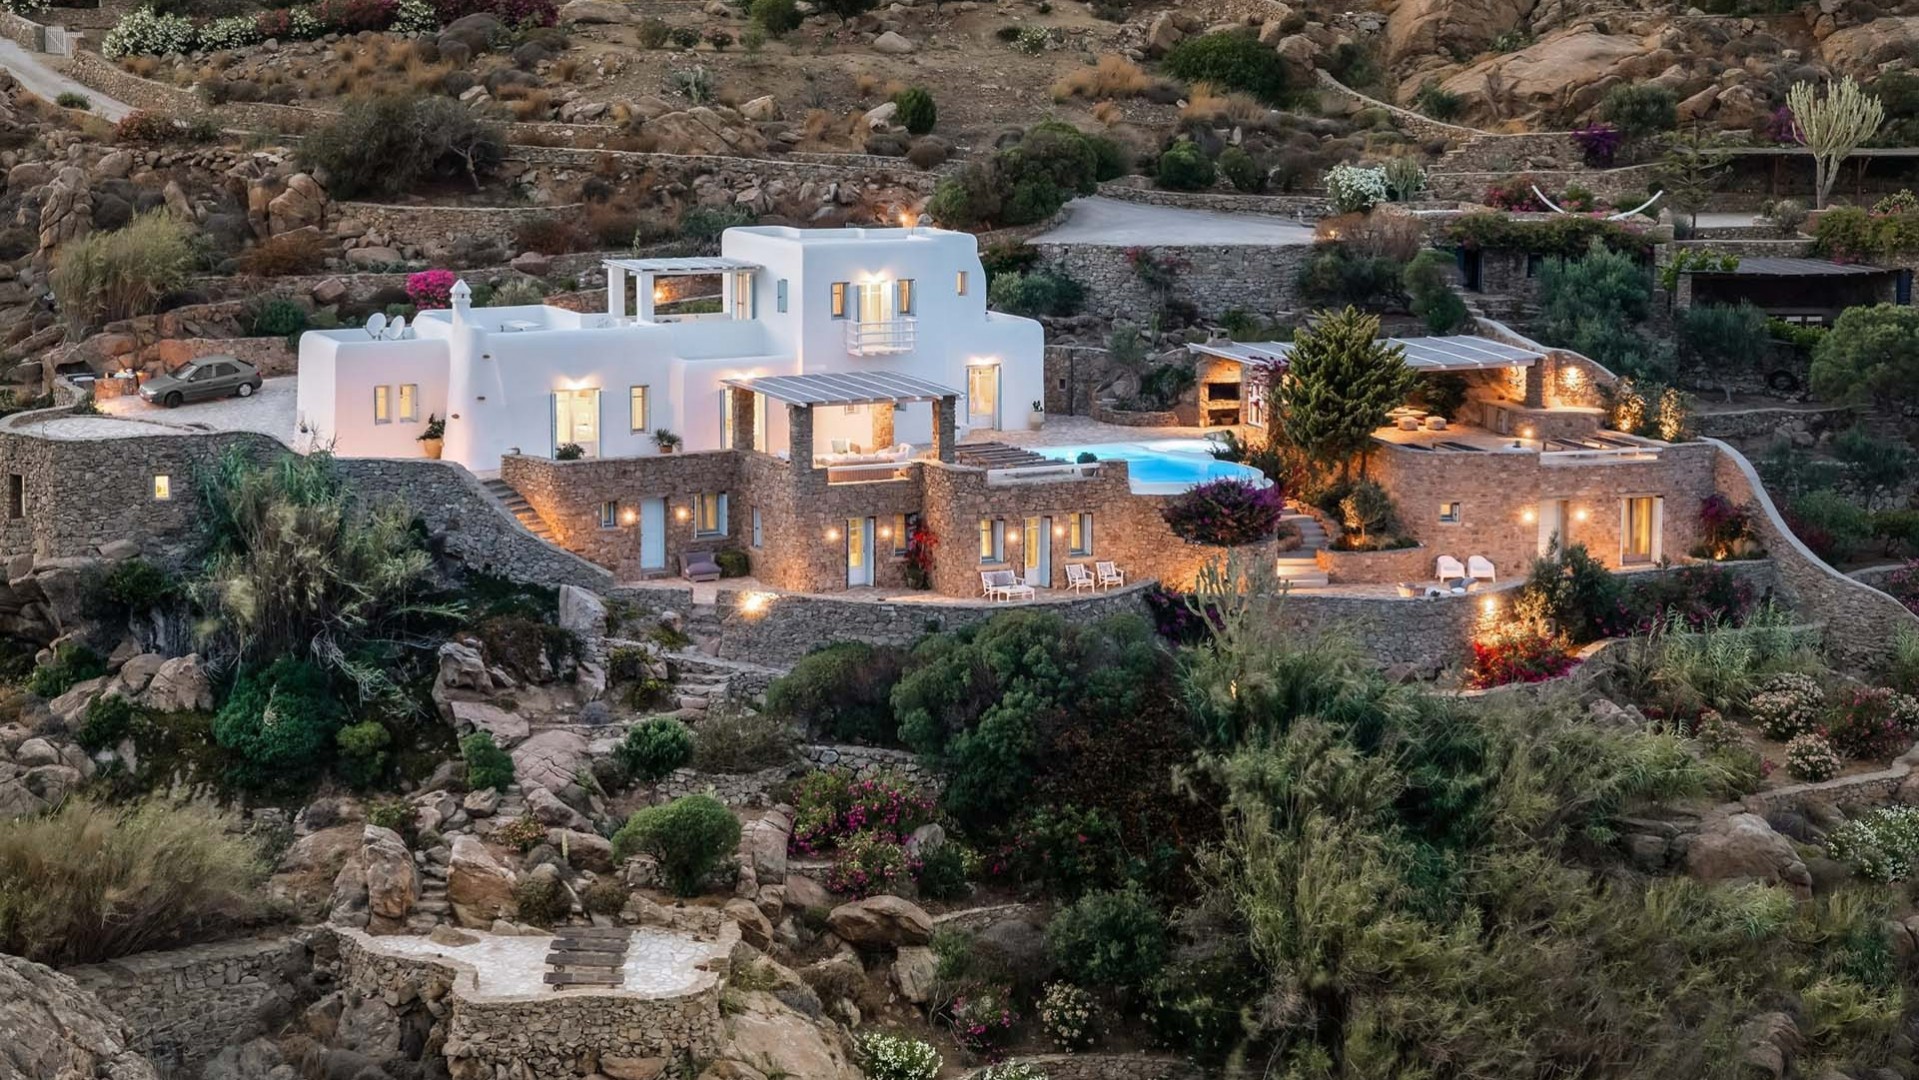 nammos village - mykonos luxury villas